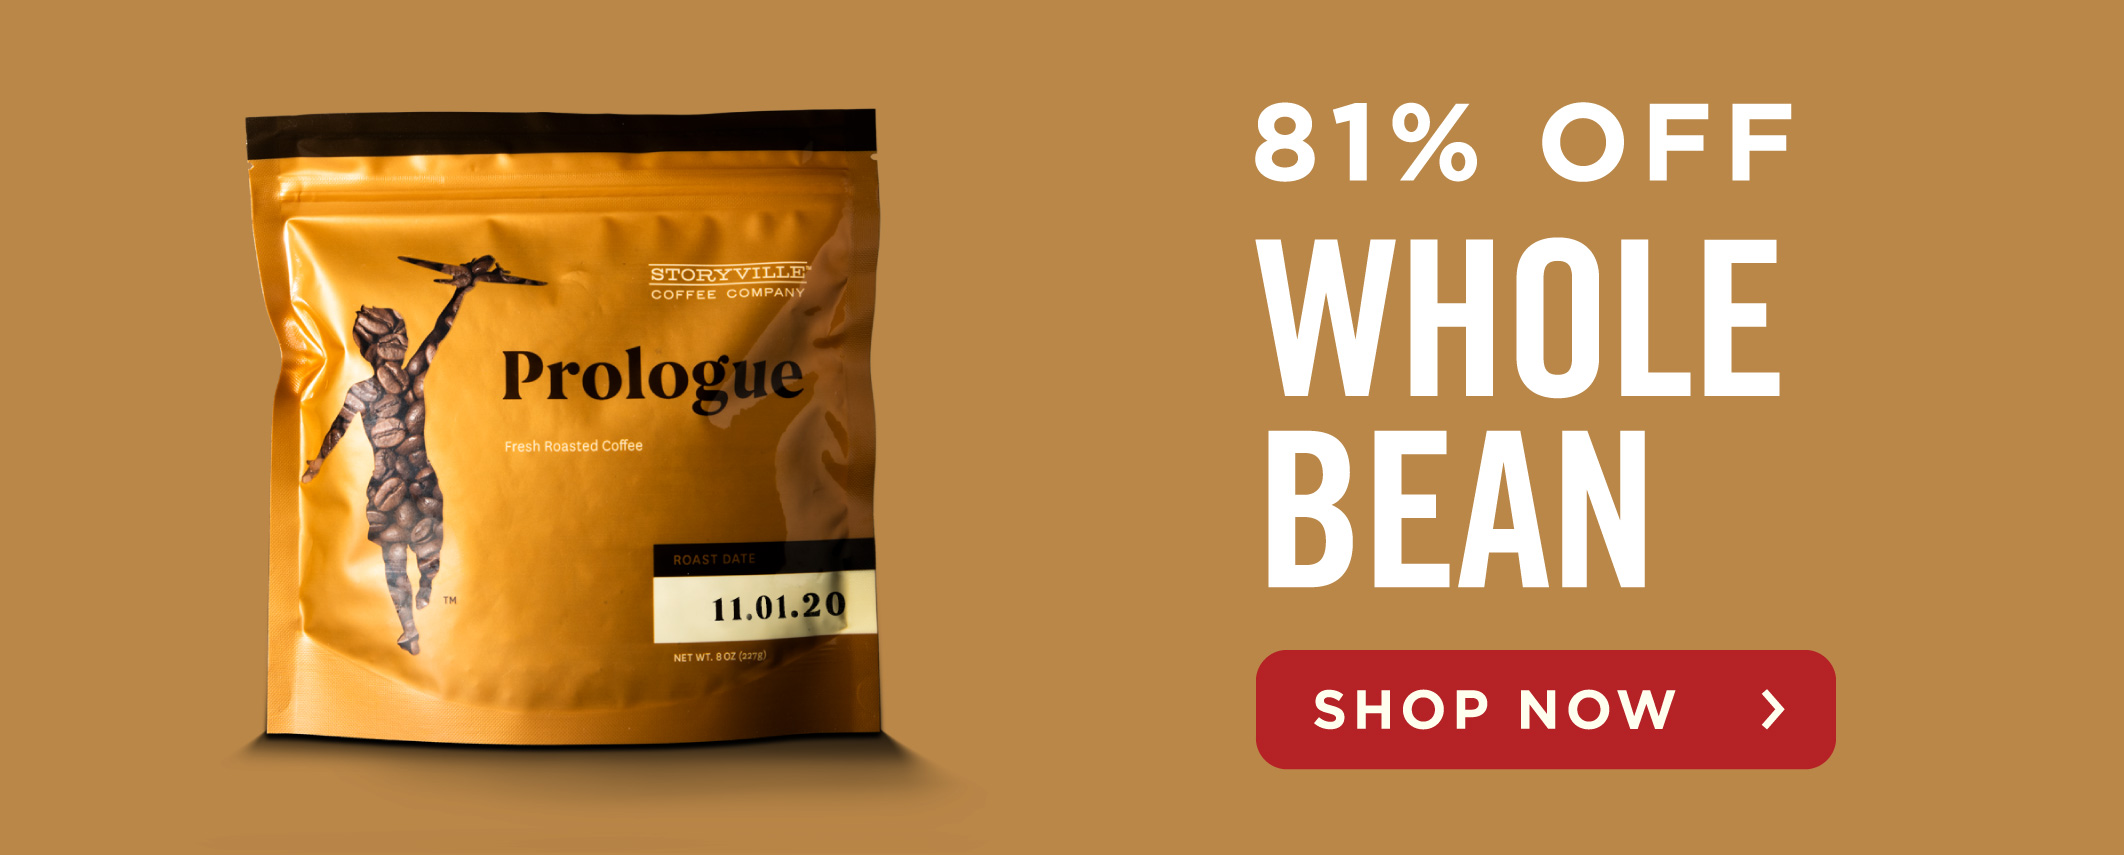 81% Off Whole Bean